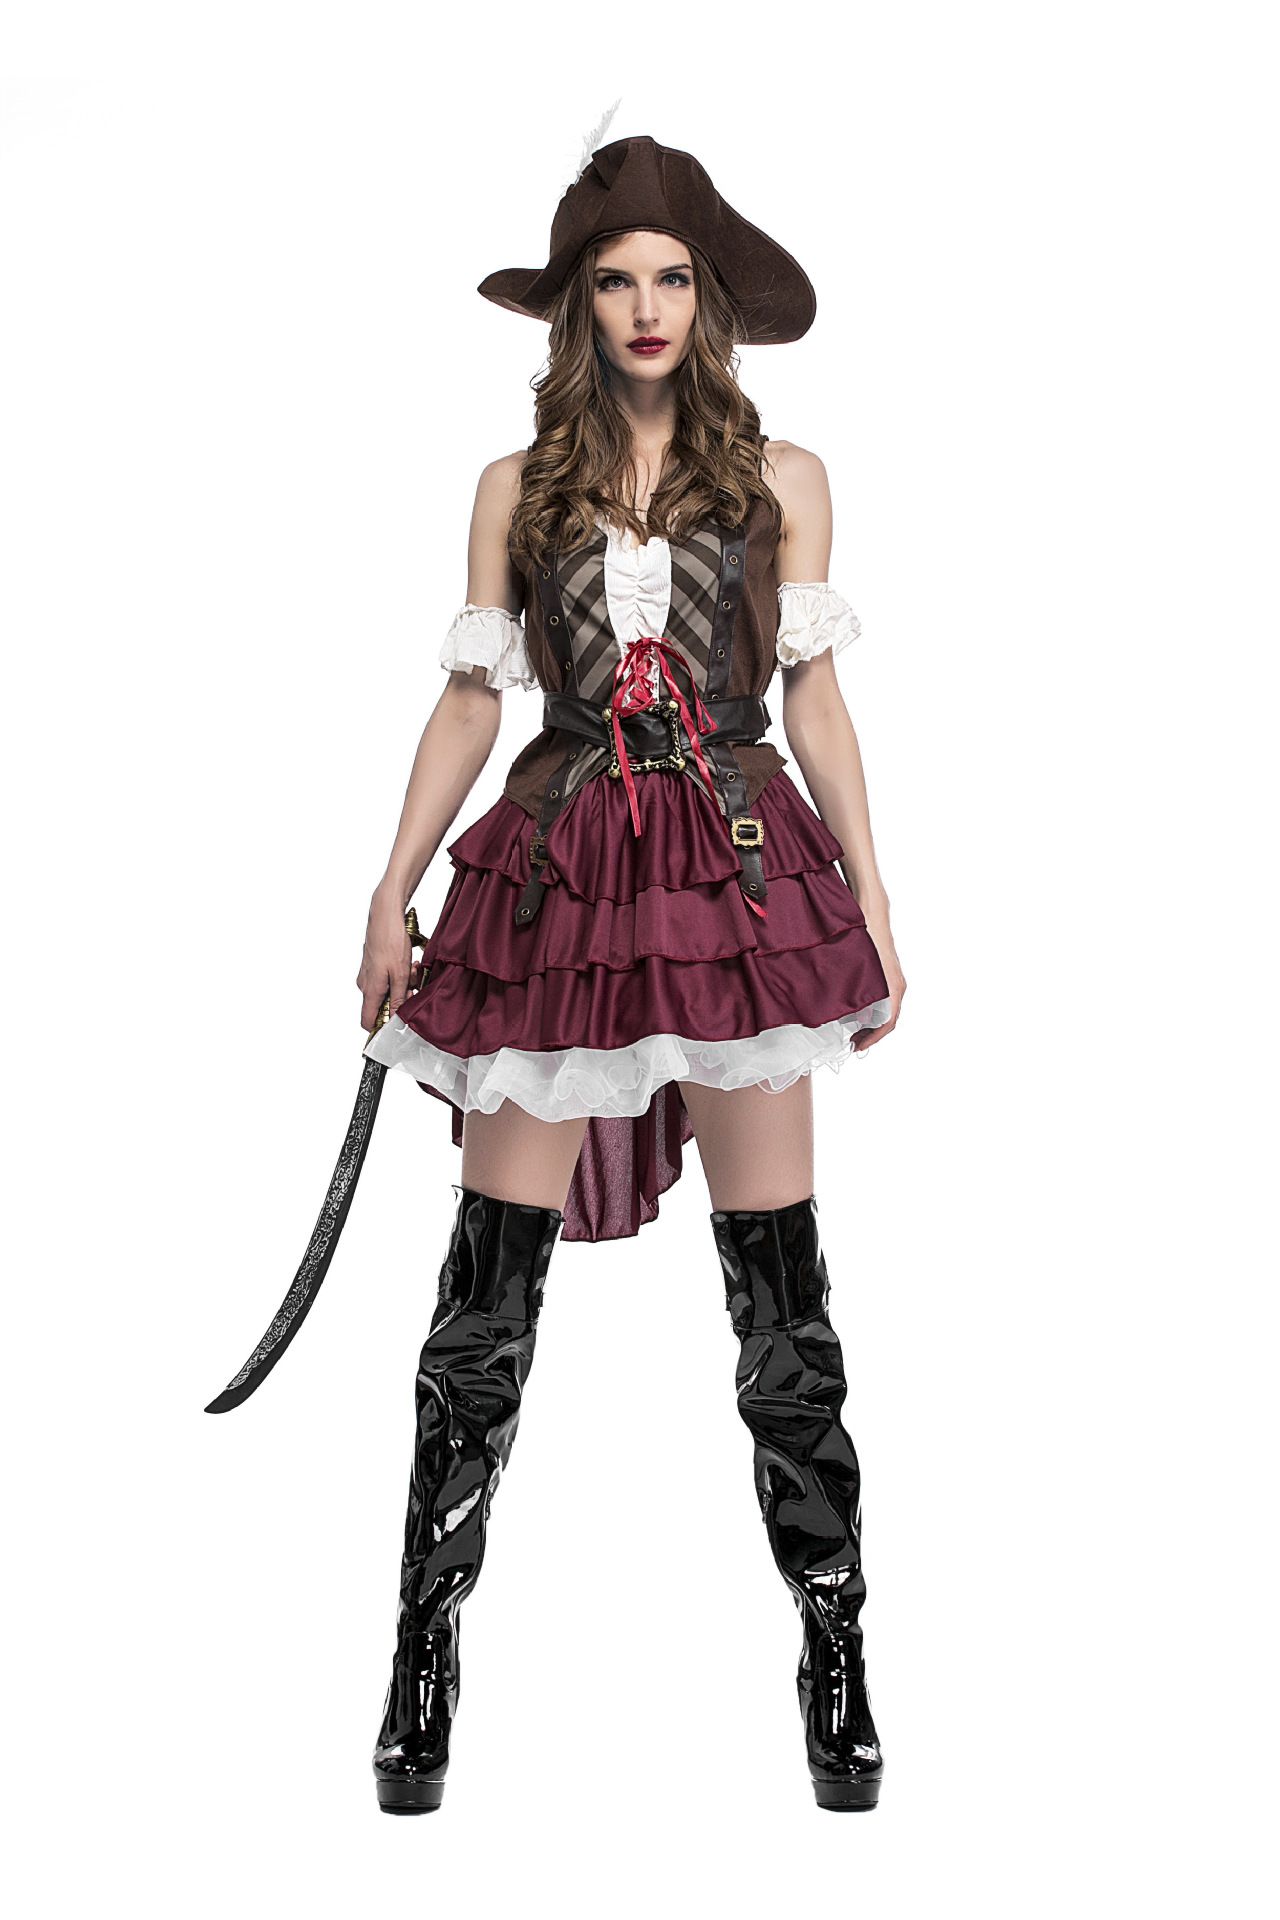 Female Pirate Costume Adult Halloween Fancy Dress